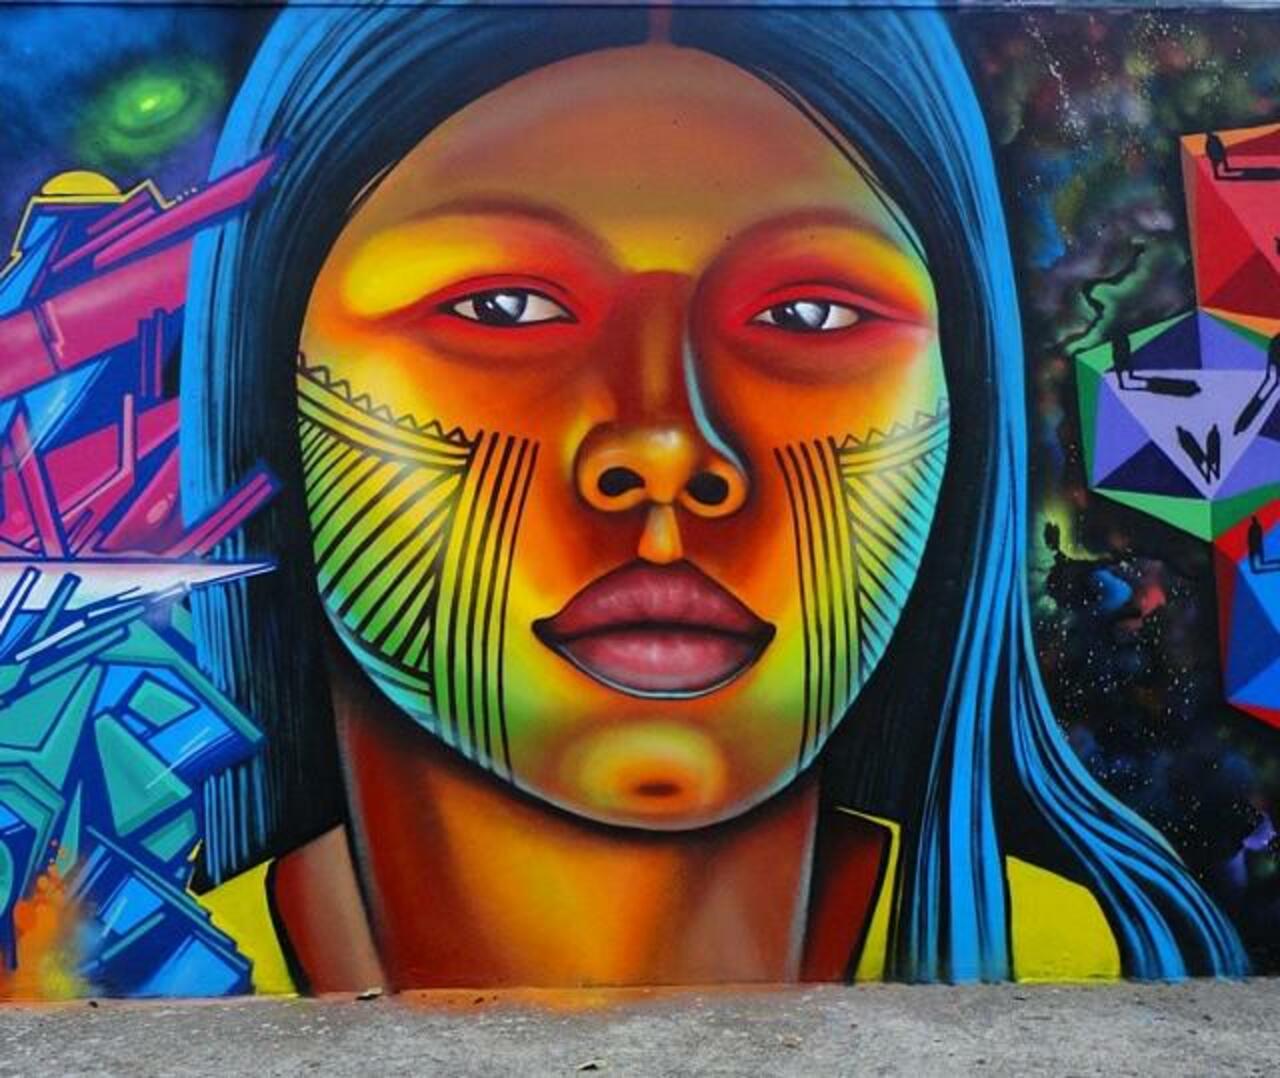 RT @oxElle: Artist ShalakAttack beautiful & colourful #StreetArt portrait in Brazil 
#art #graffiti #mural #streetart http://t.co/EEh3eLexji